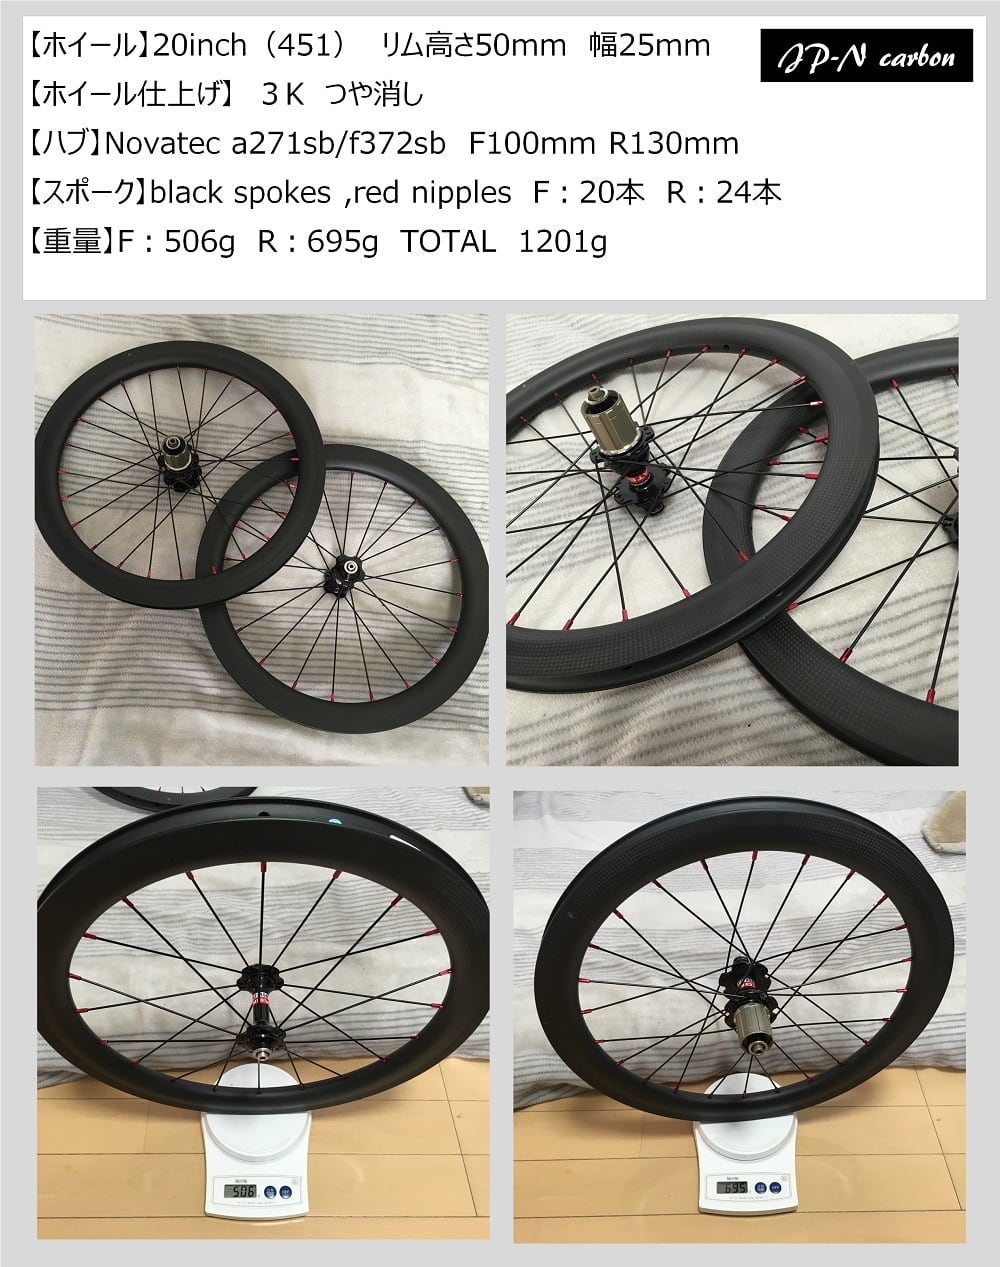 Carbon Wheel 20inch-451 (STD spec) カーボンホイール | JP-N carbon